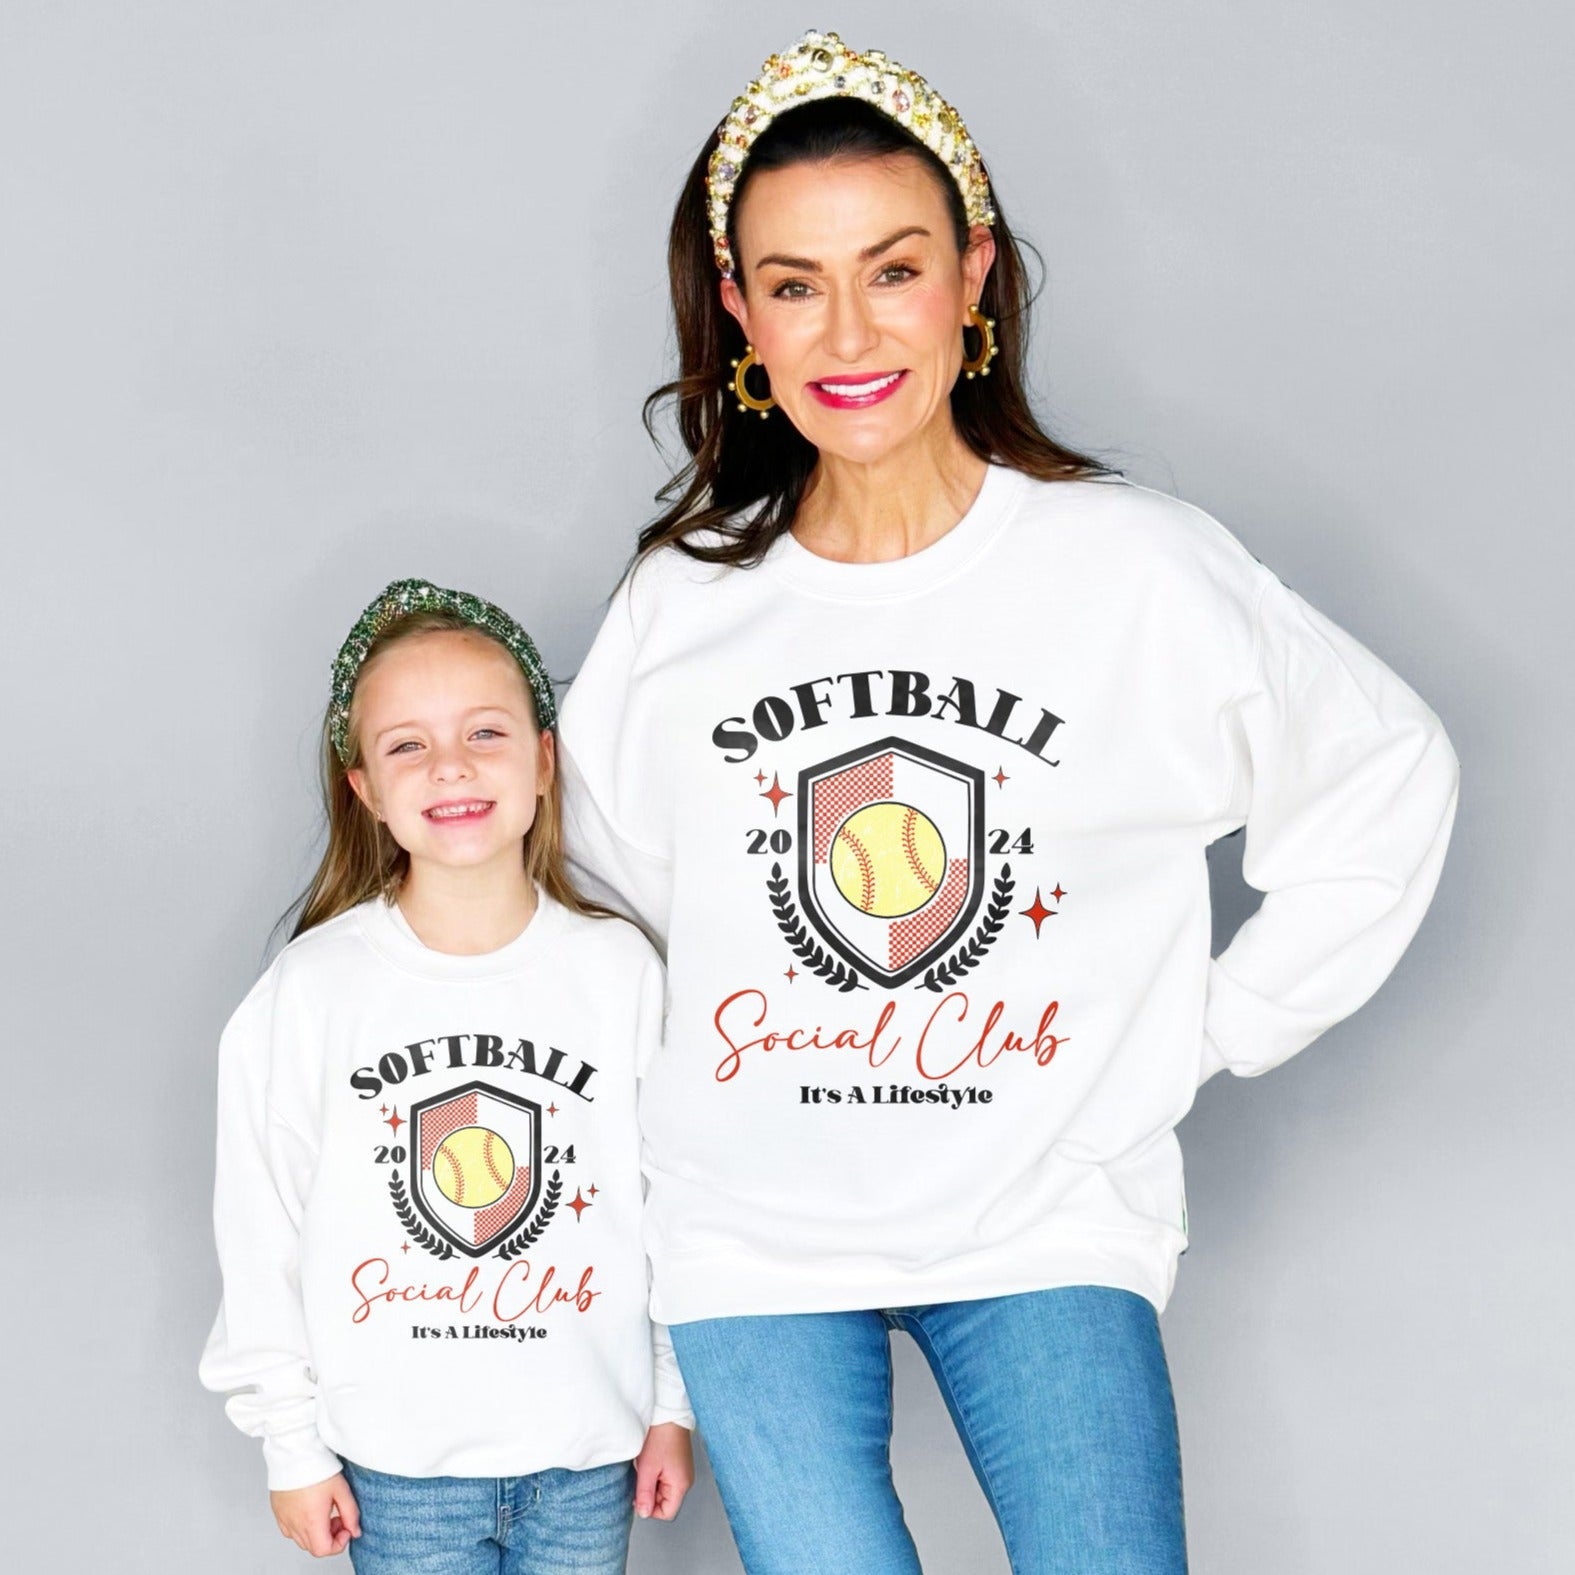 Softball Social Club Youth and Adult Sweatshirt